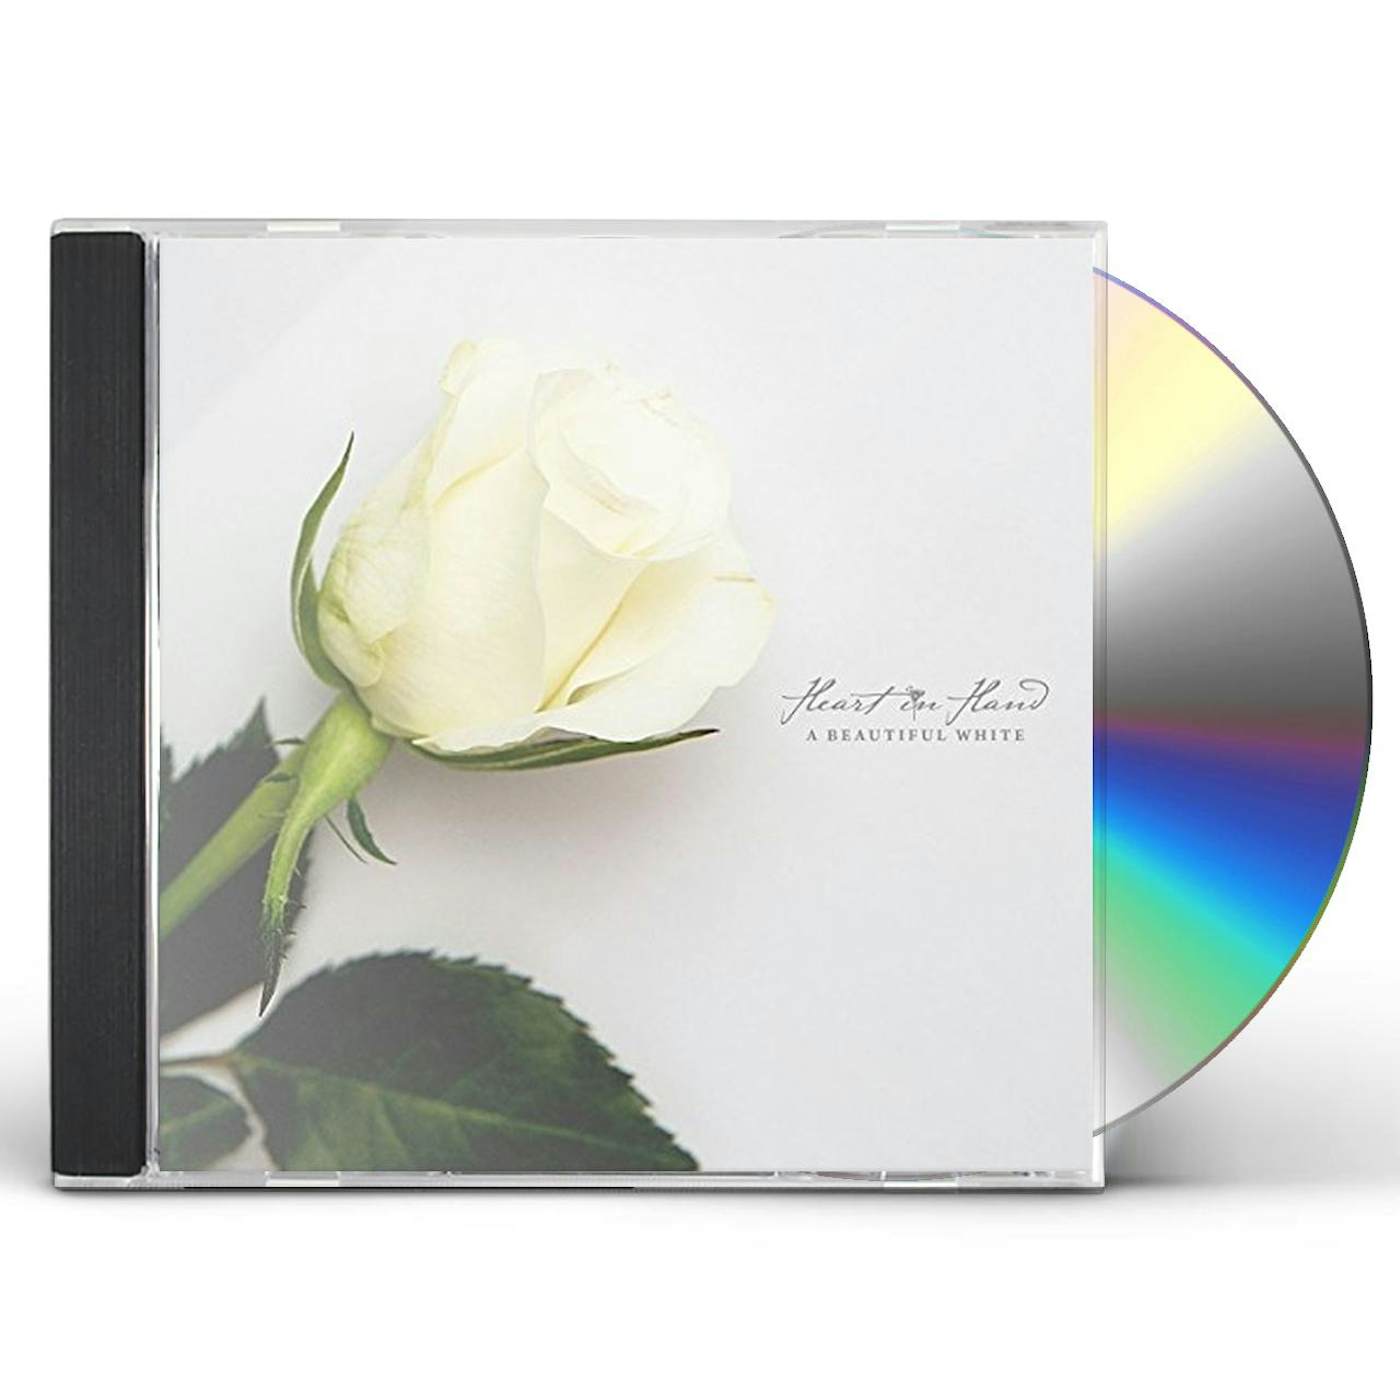 Heart In Hand BEAUTIFUL WHITE CD